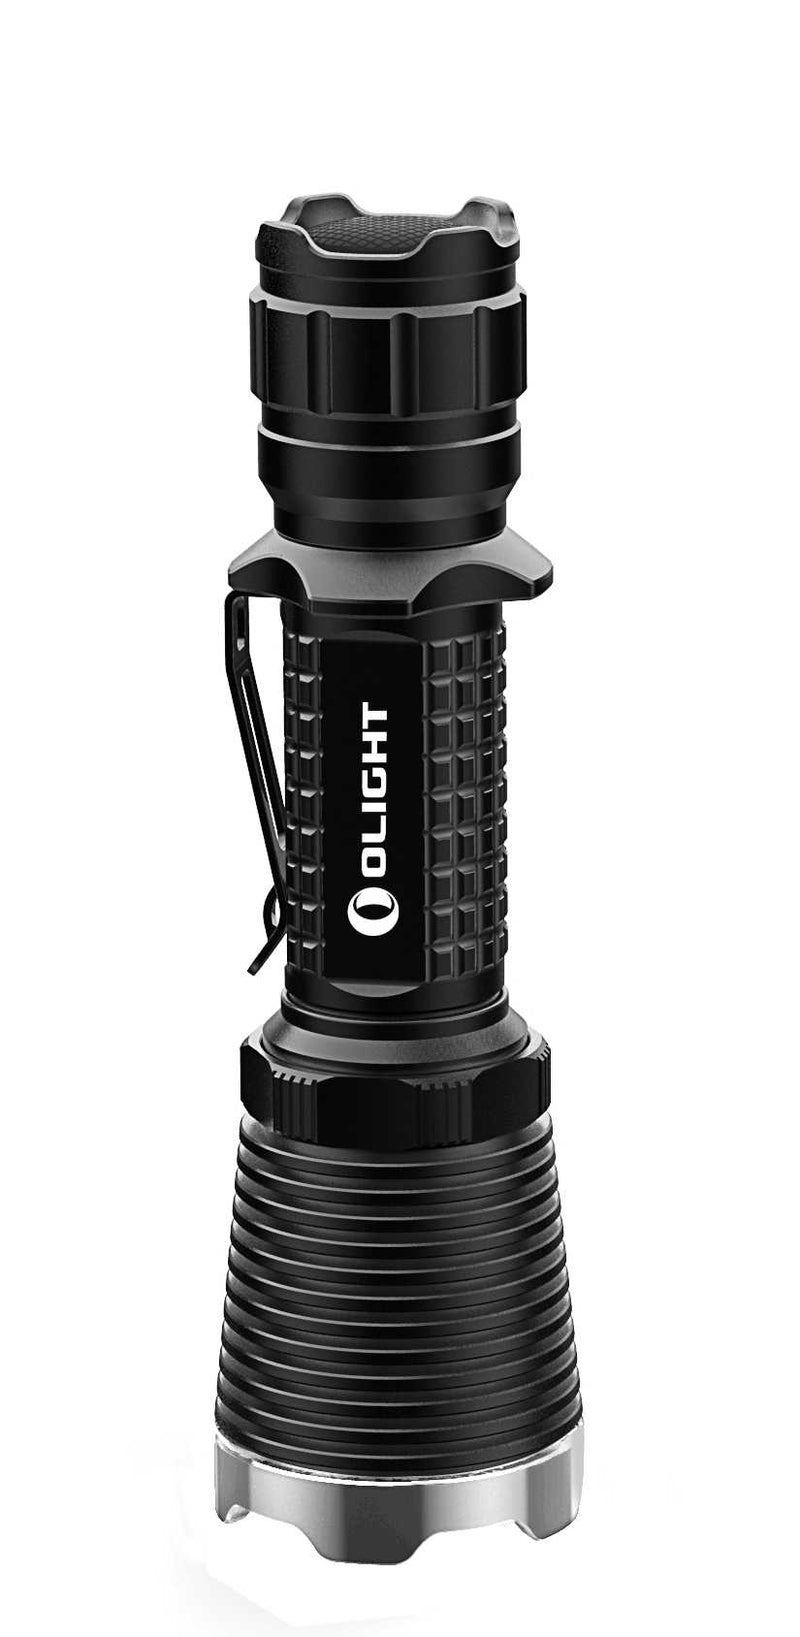 Olight M23 Javelot Kit 1x 18650 / 2x CR123A 1020 Lumens Customized Cree XP-L LED Flashlight